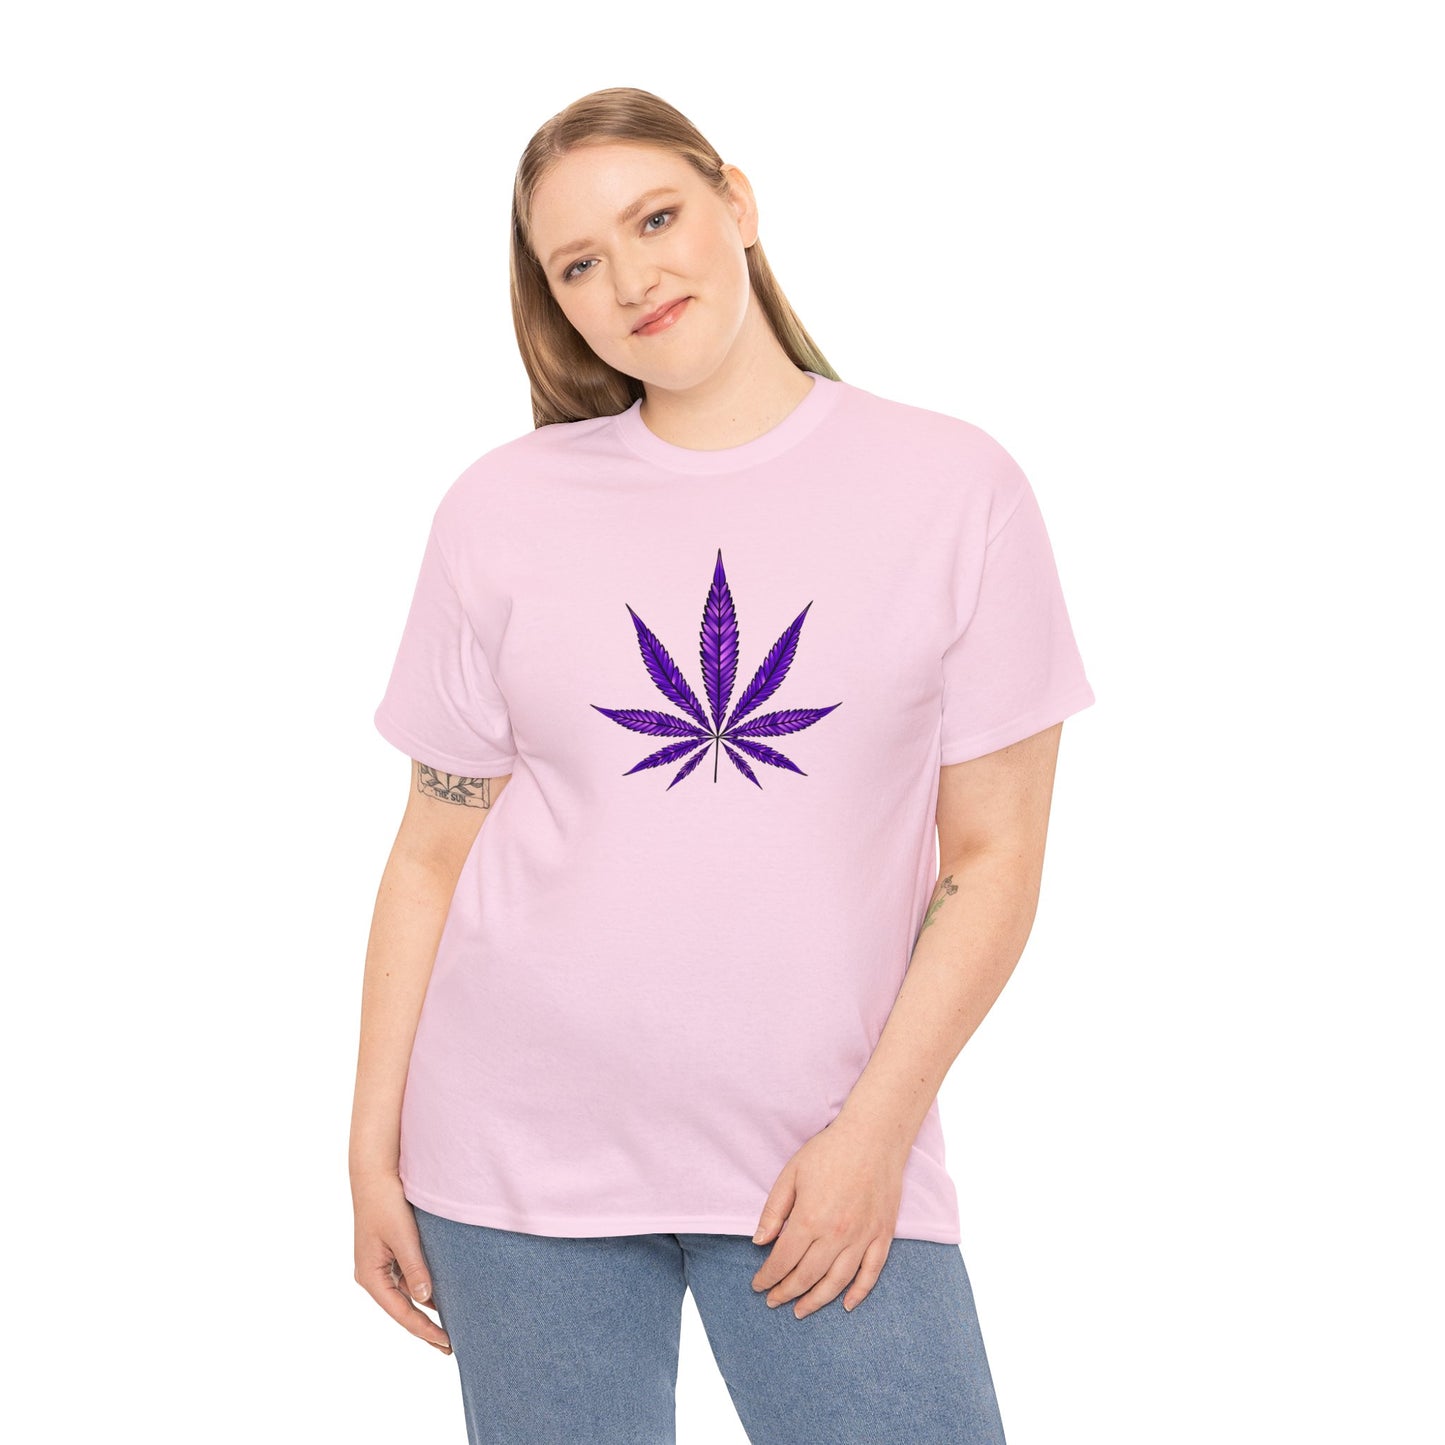 A woman in a Purple Cannabis Leaf Tee, representing marijuana culture.